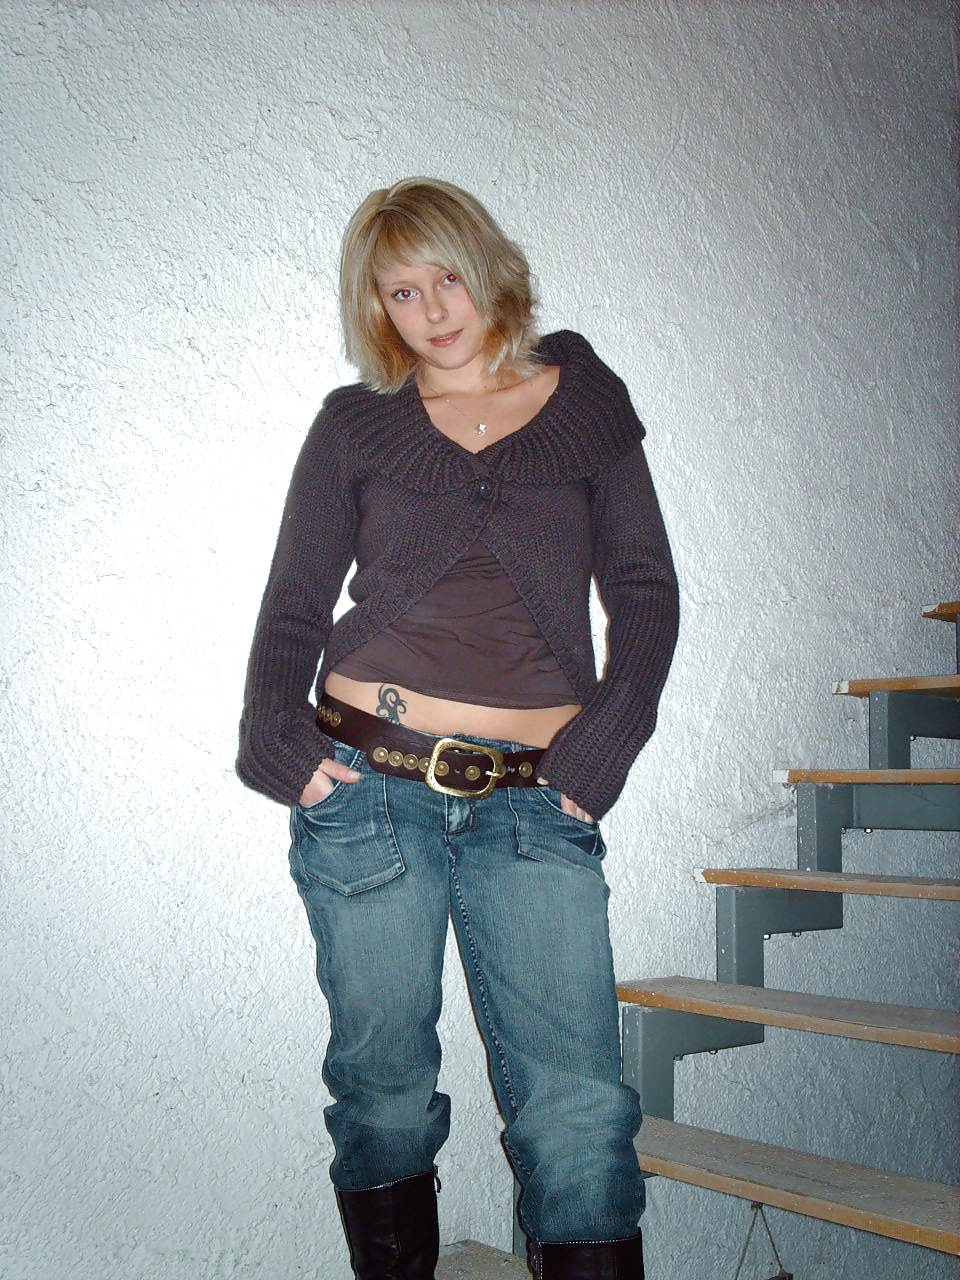 Sexy Blonde German adult photos